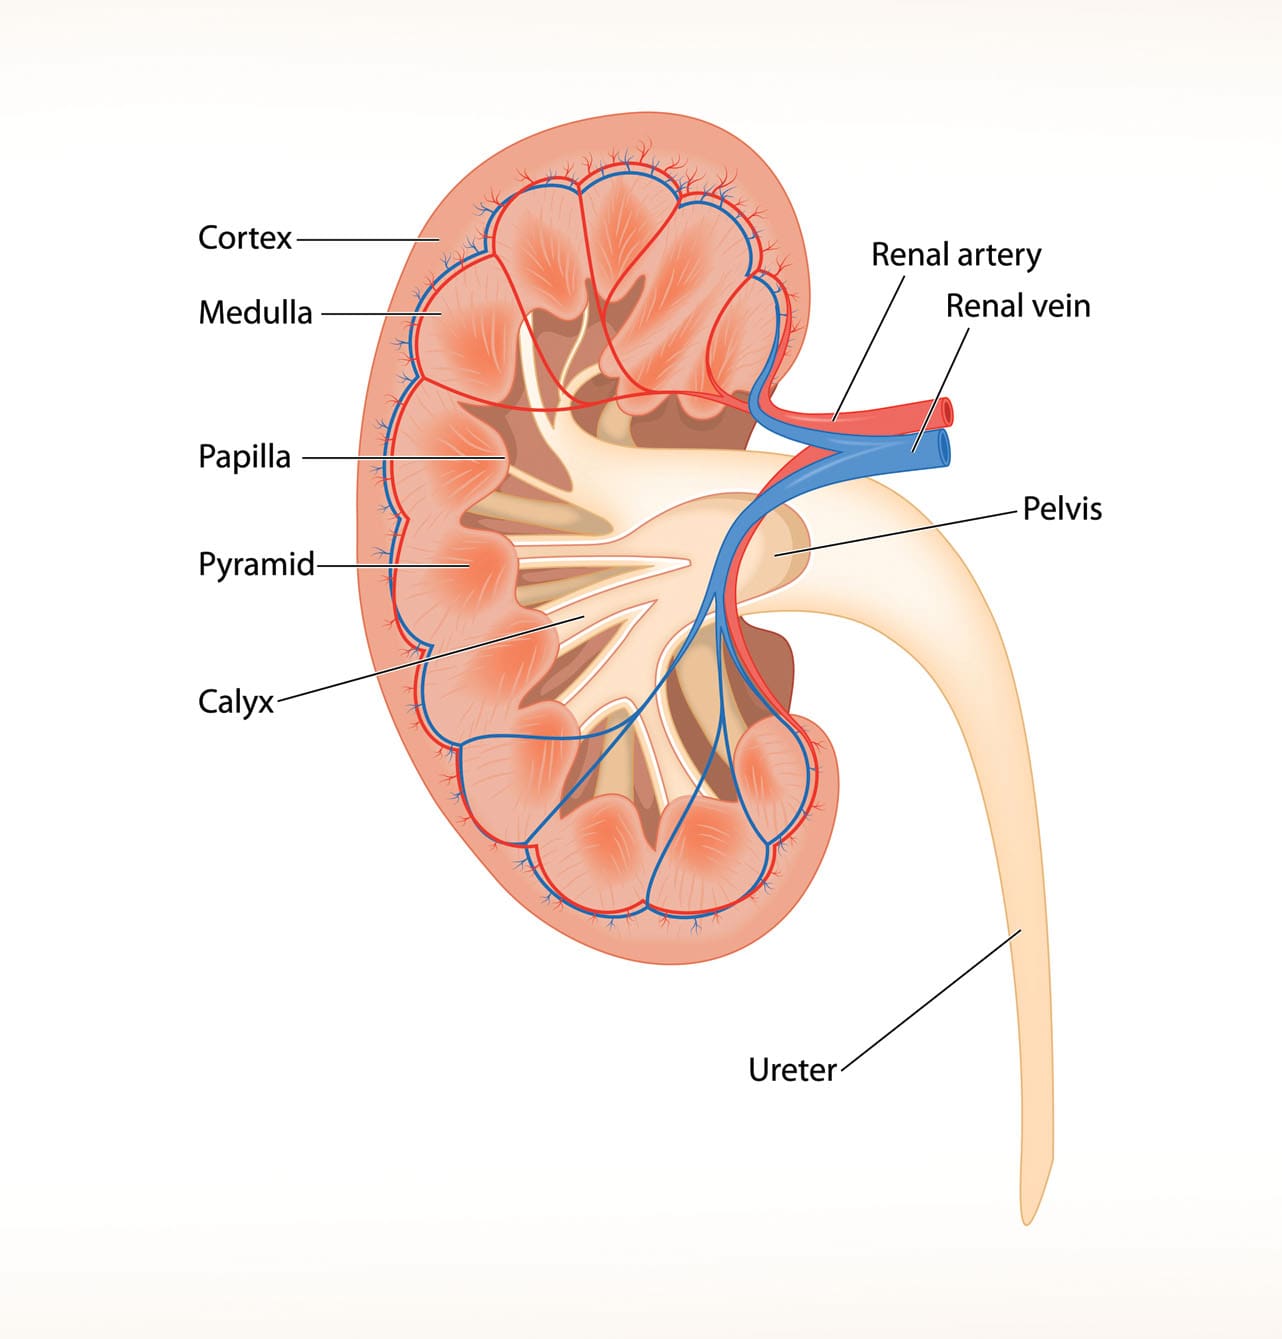 Renal Cortex: Kidney, Anatomy, Function & Conditions